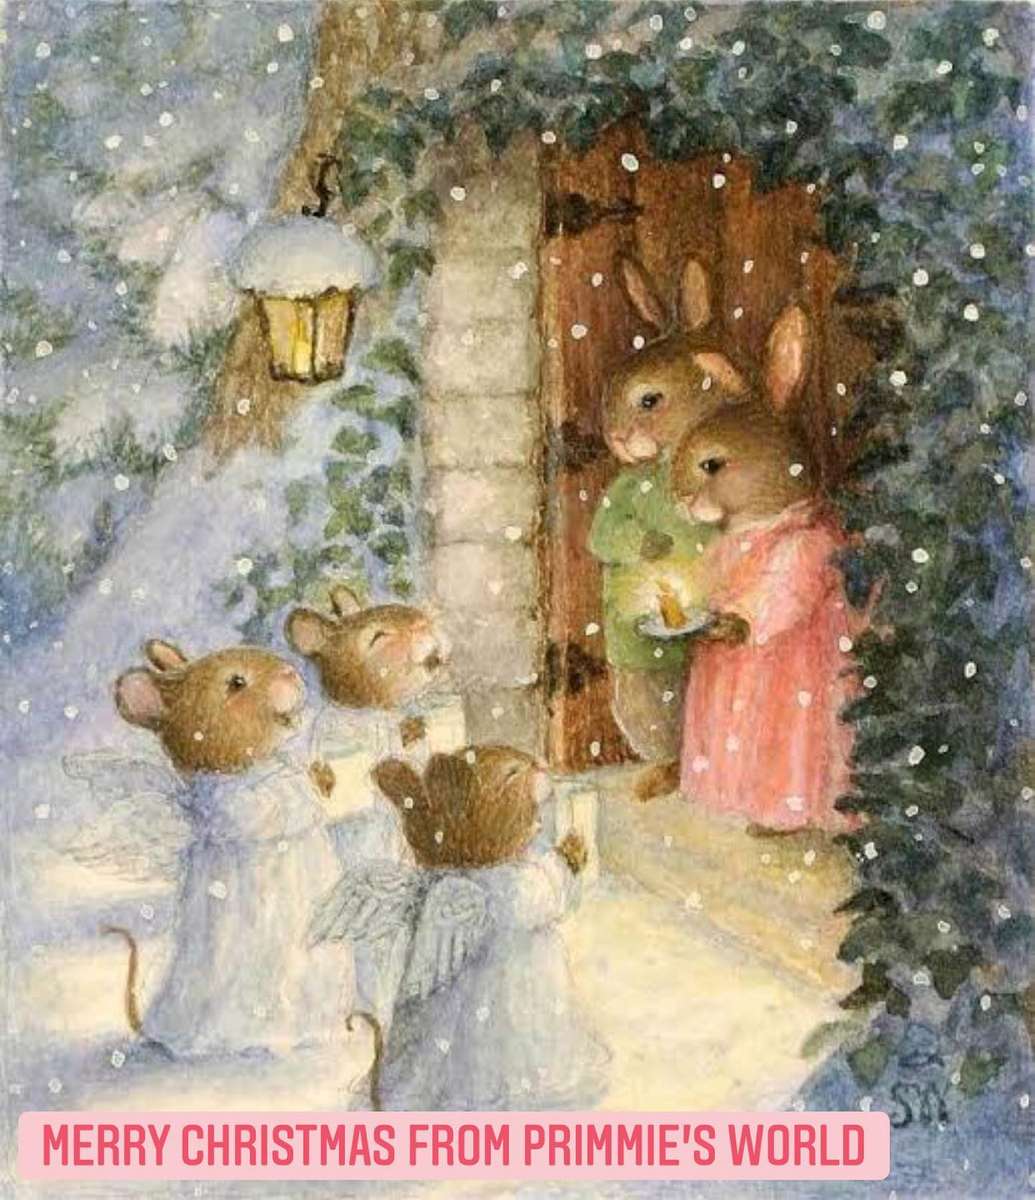 мыши поют Рождество среди кроликов пазл онлайн